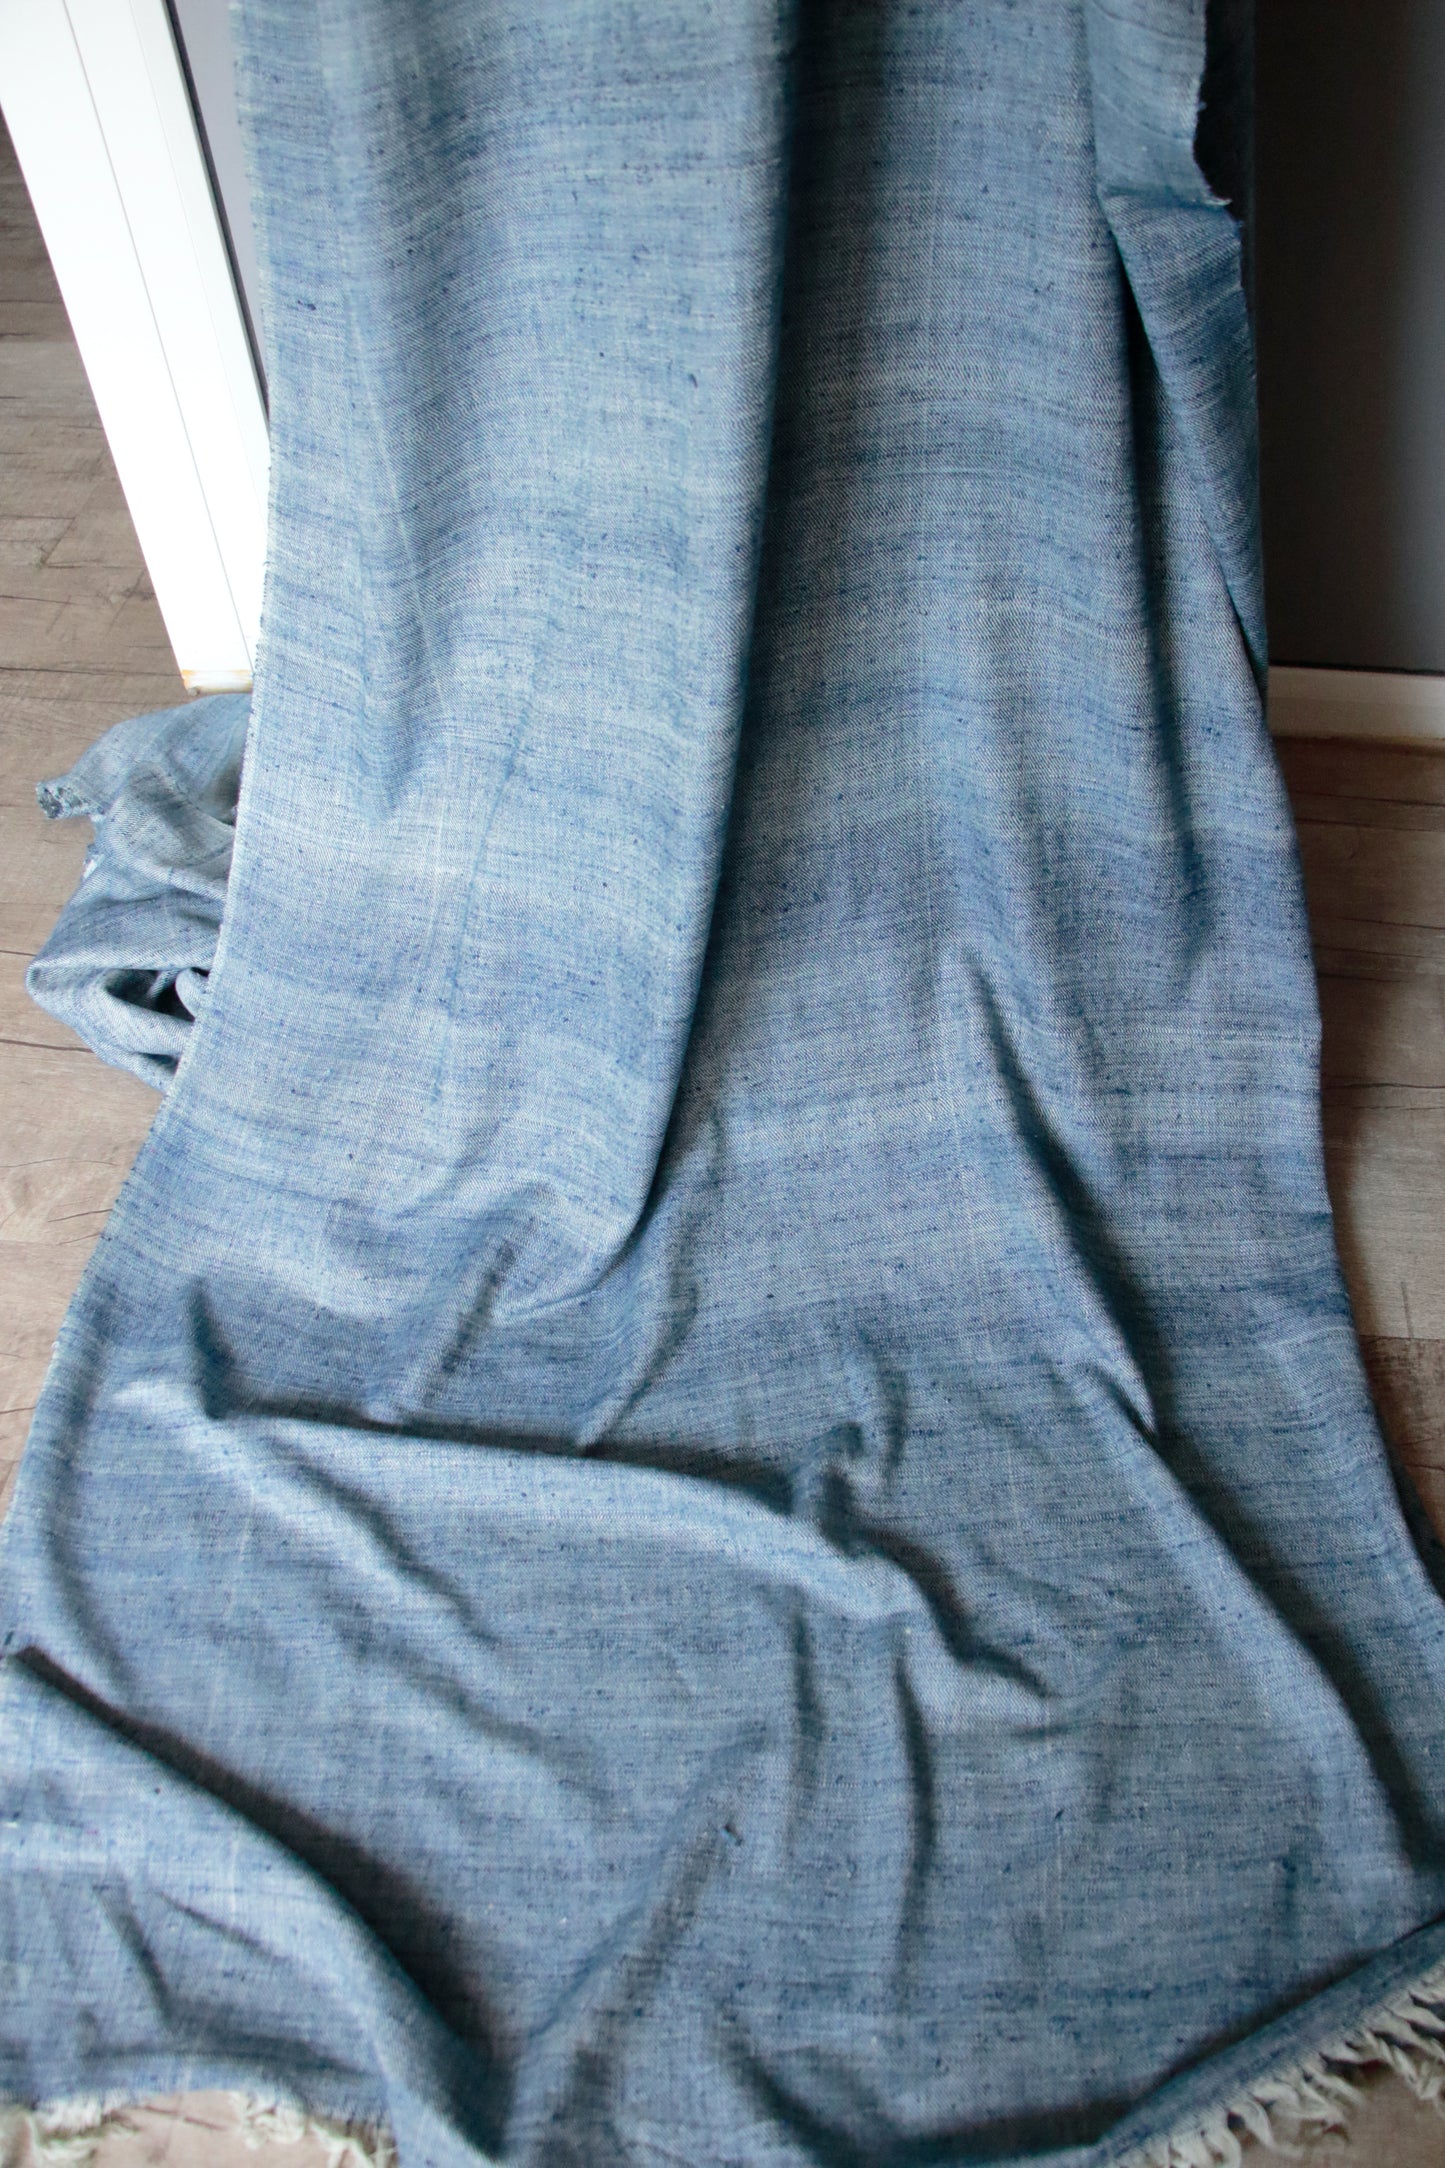 Handloom Twill Weave Natural Indigo dyed Hundred percent Eri Silk / Ahimsa silk by yard.